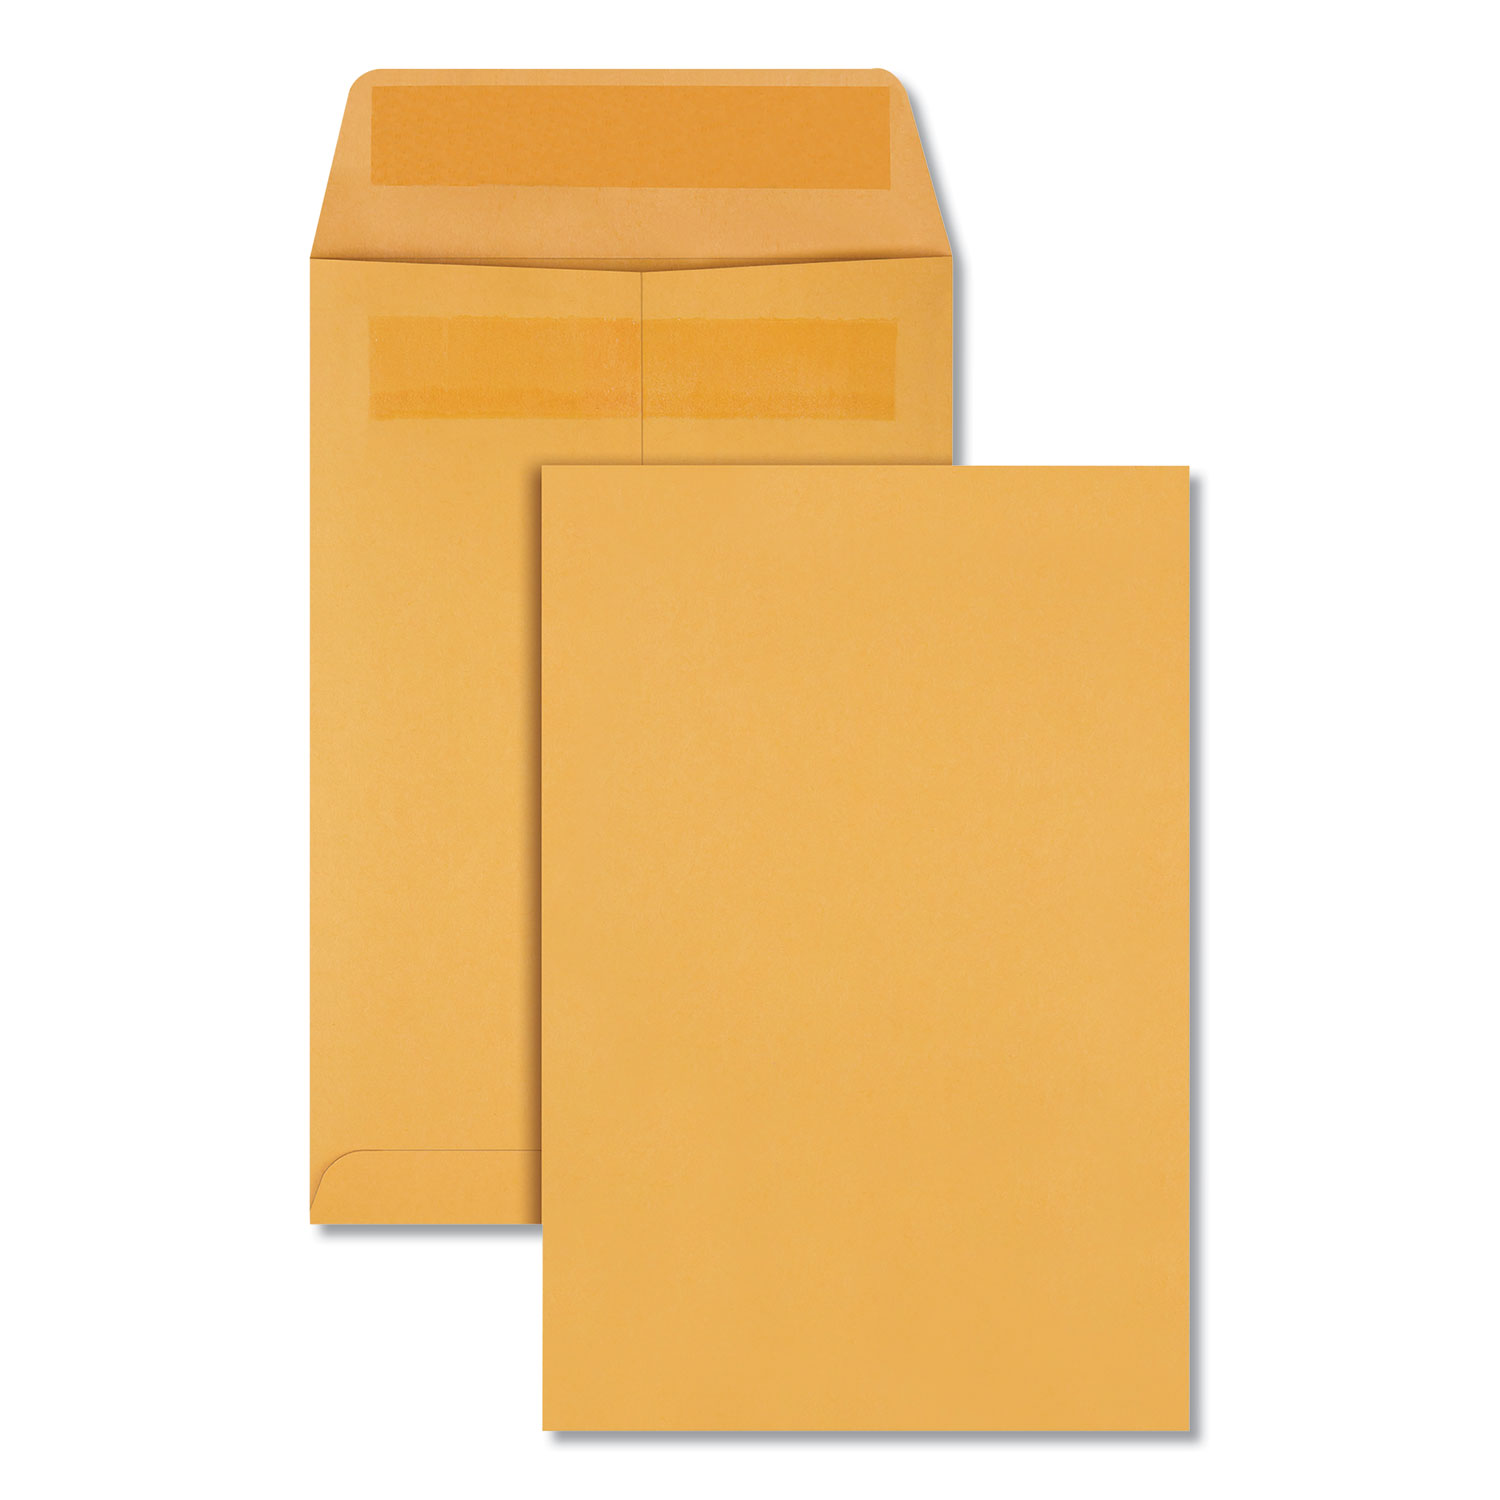 Quality Park™ Redi-Seal Catalog Envelope, #1 3/4, Cheese Blade Flap, Redi-Seal Closure, 6.5 x 9.5, Brown Kraft, 100/Box